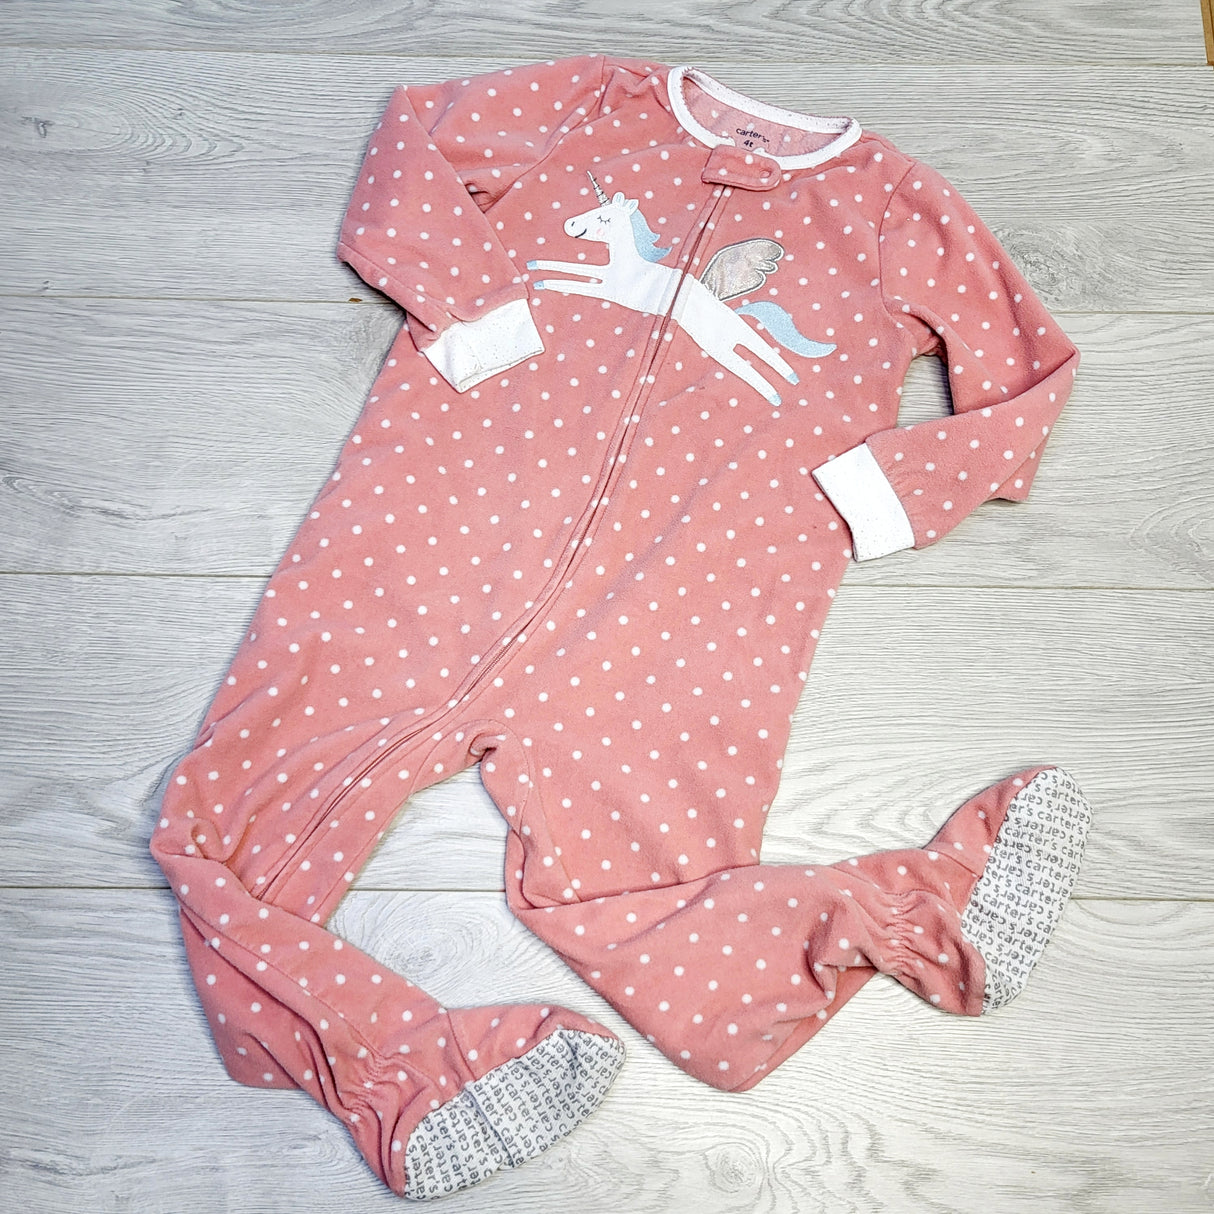 RZA1 - Carters pink polka dot zippered fleece sleeper with unicorn, size 4T